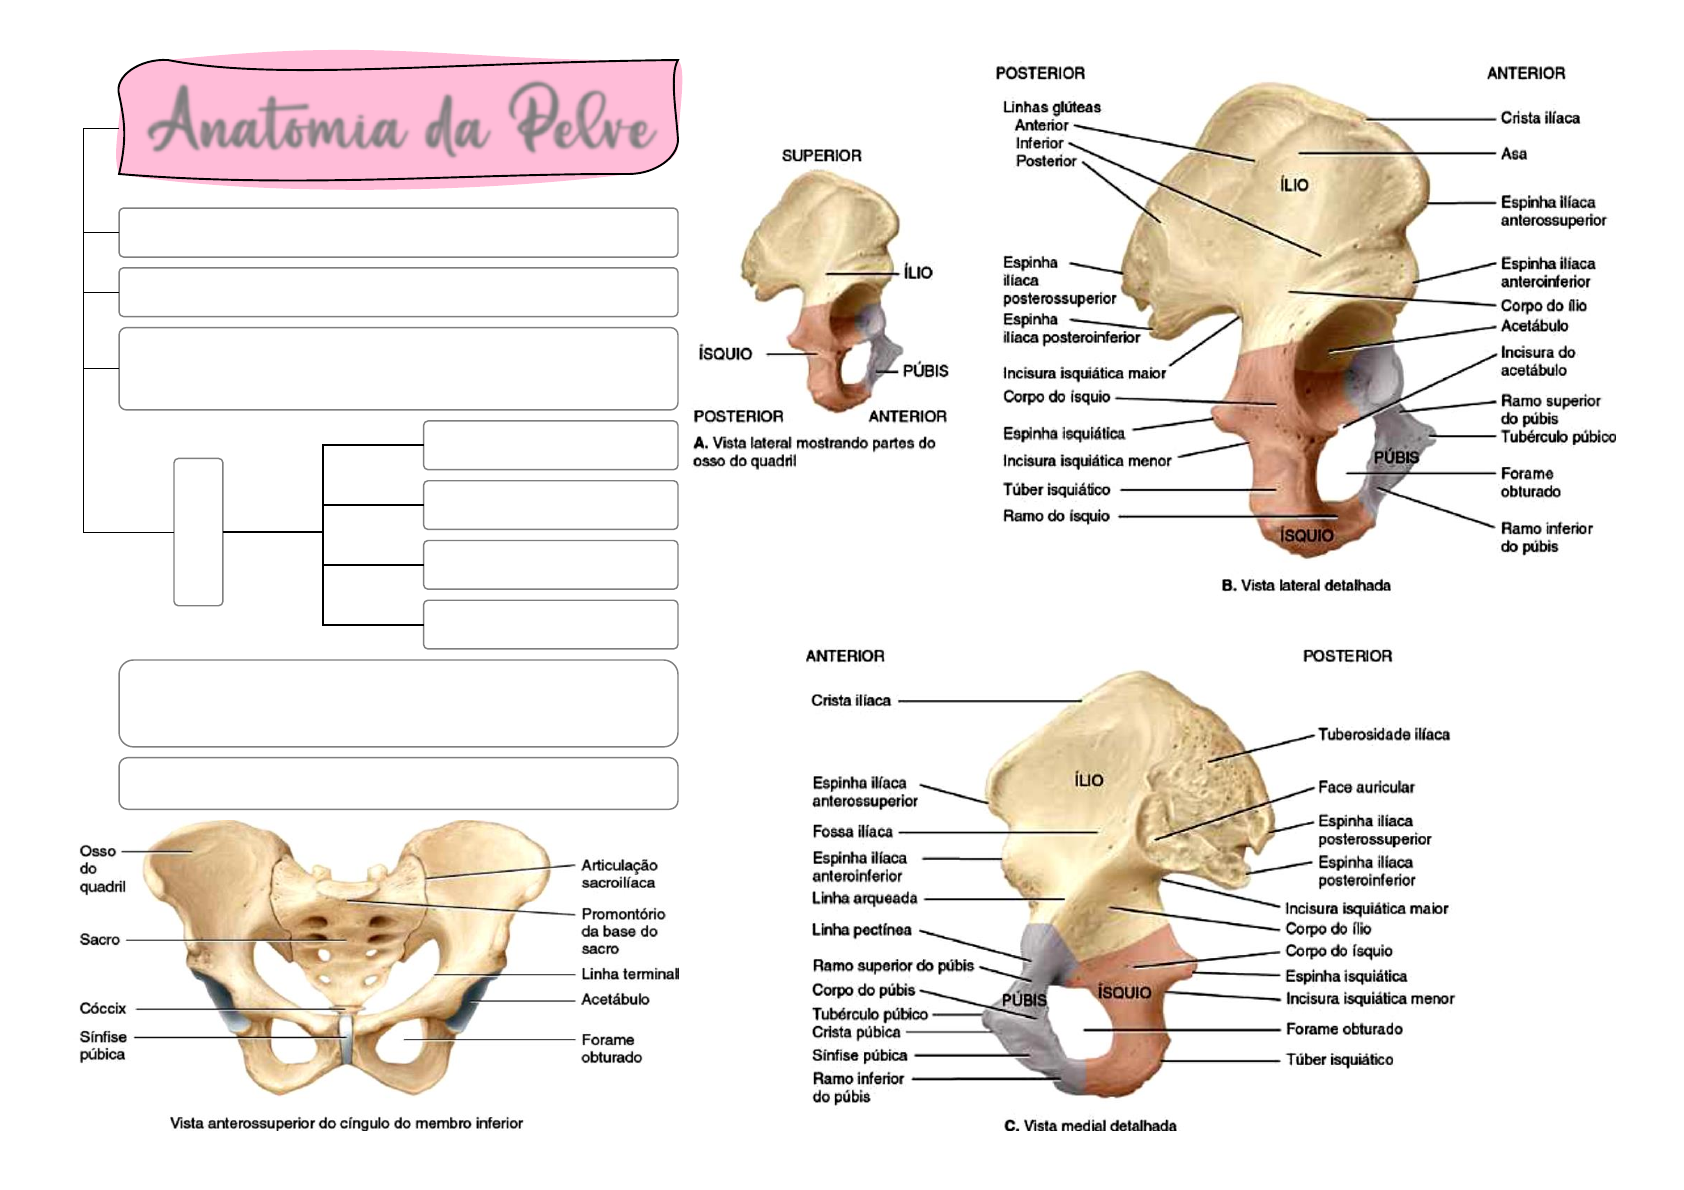 Anatomia da Pelve - Anatomia I